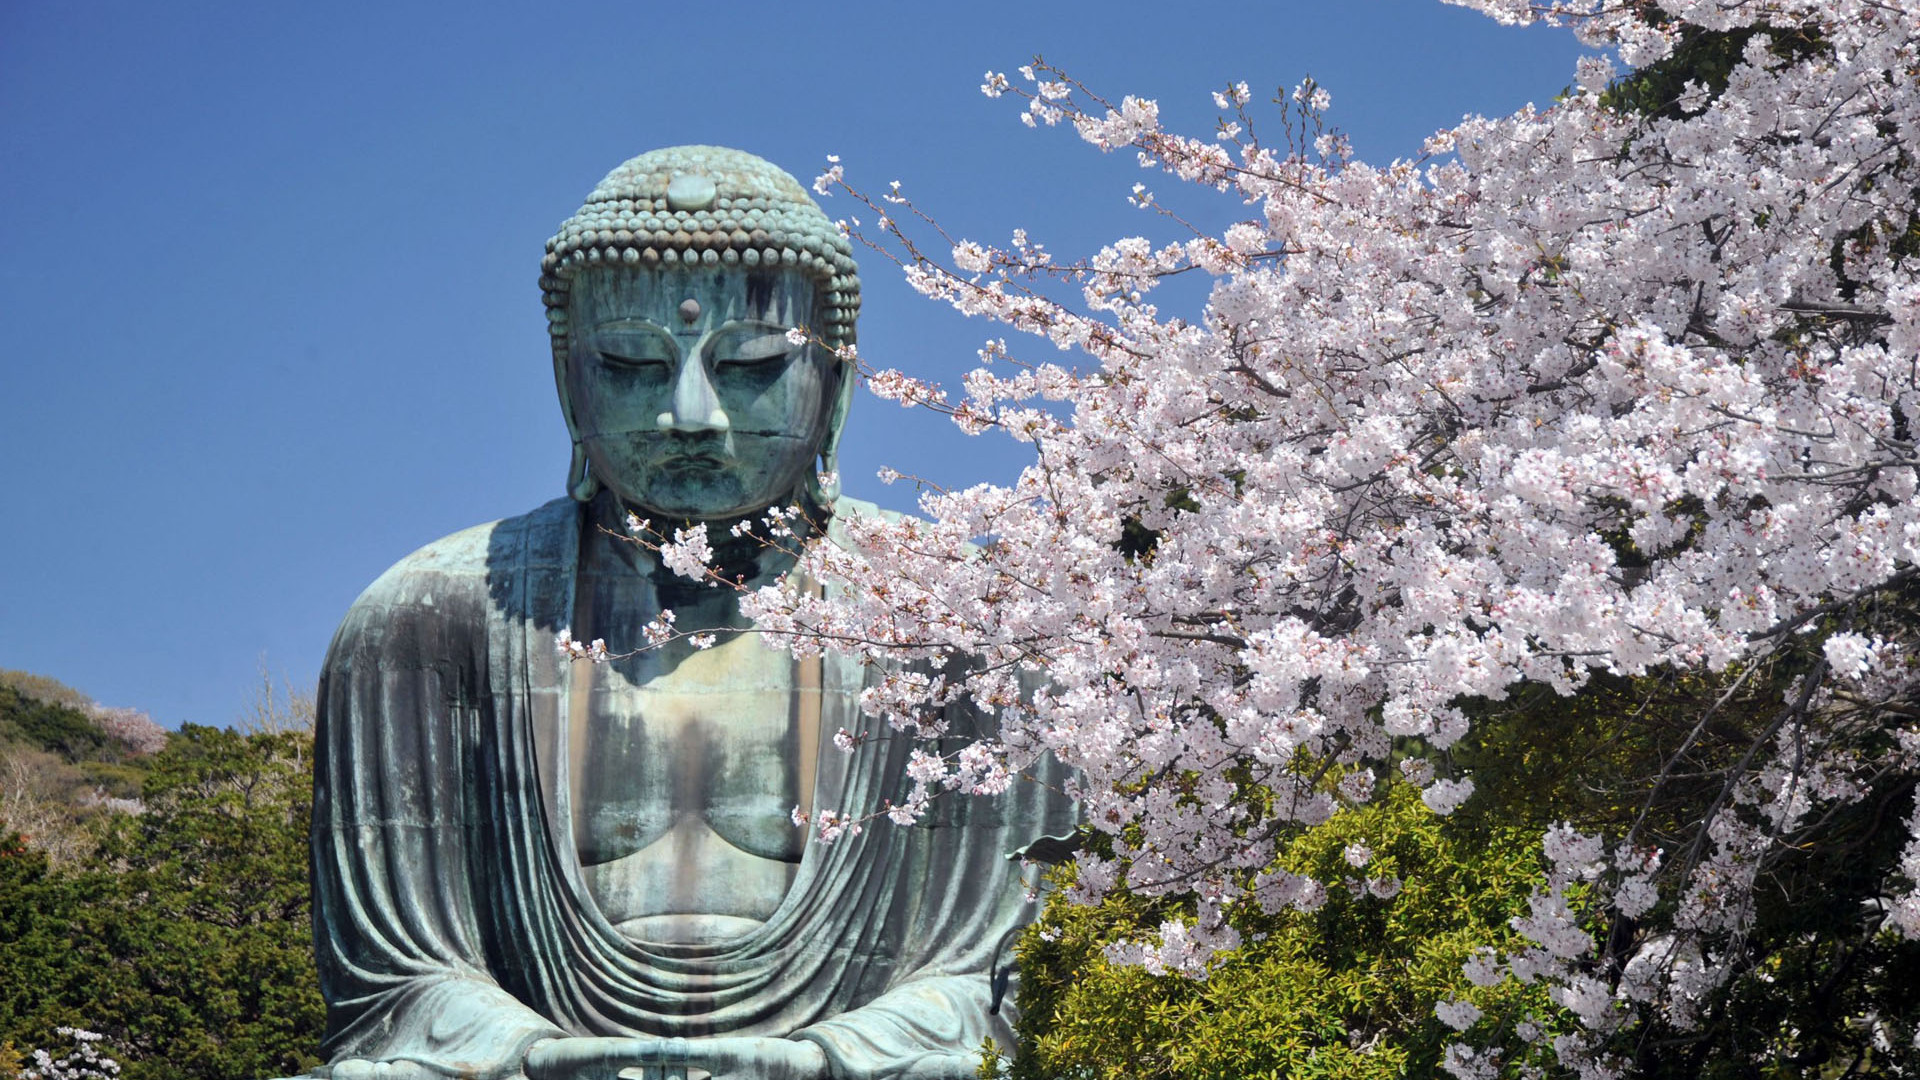 Kotoku-in / Great Buddha of Kamakura